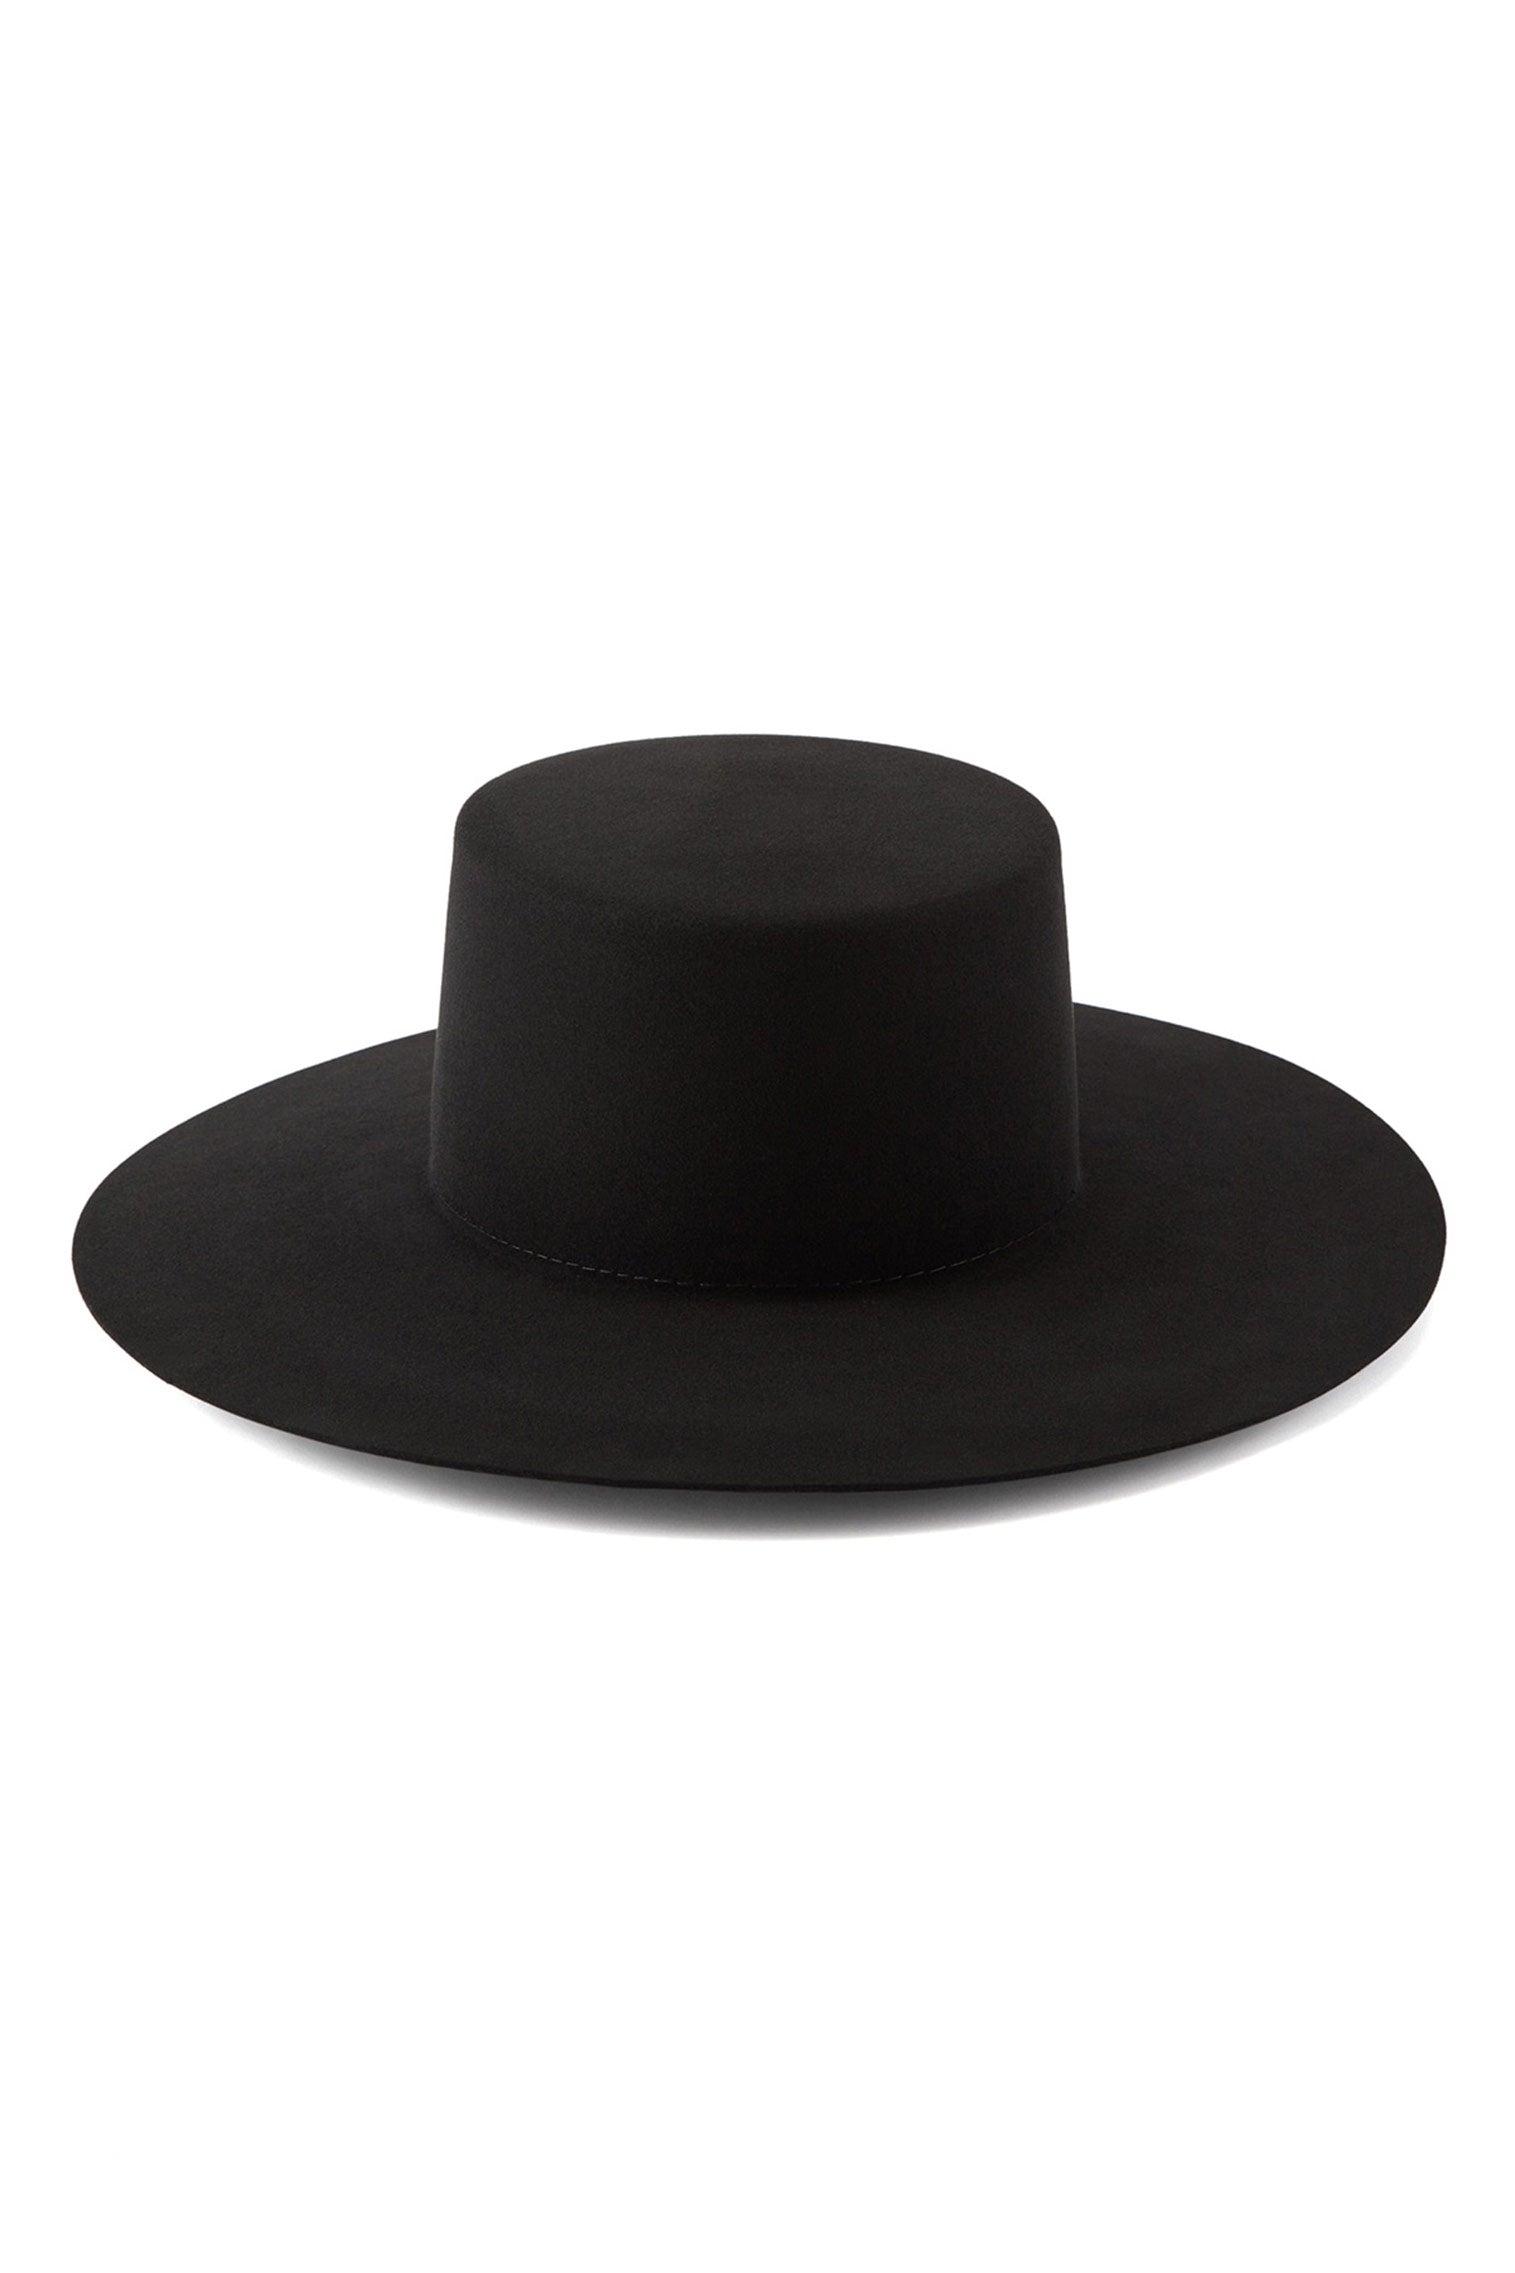 The Vicenzo - Escorial Wool Hats - Lock & Co. Hatters London UK